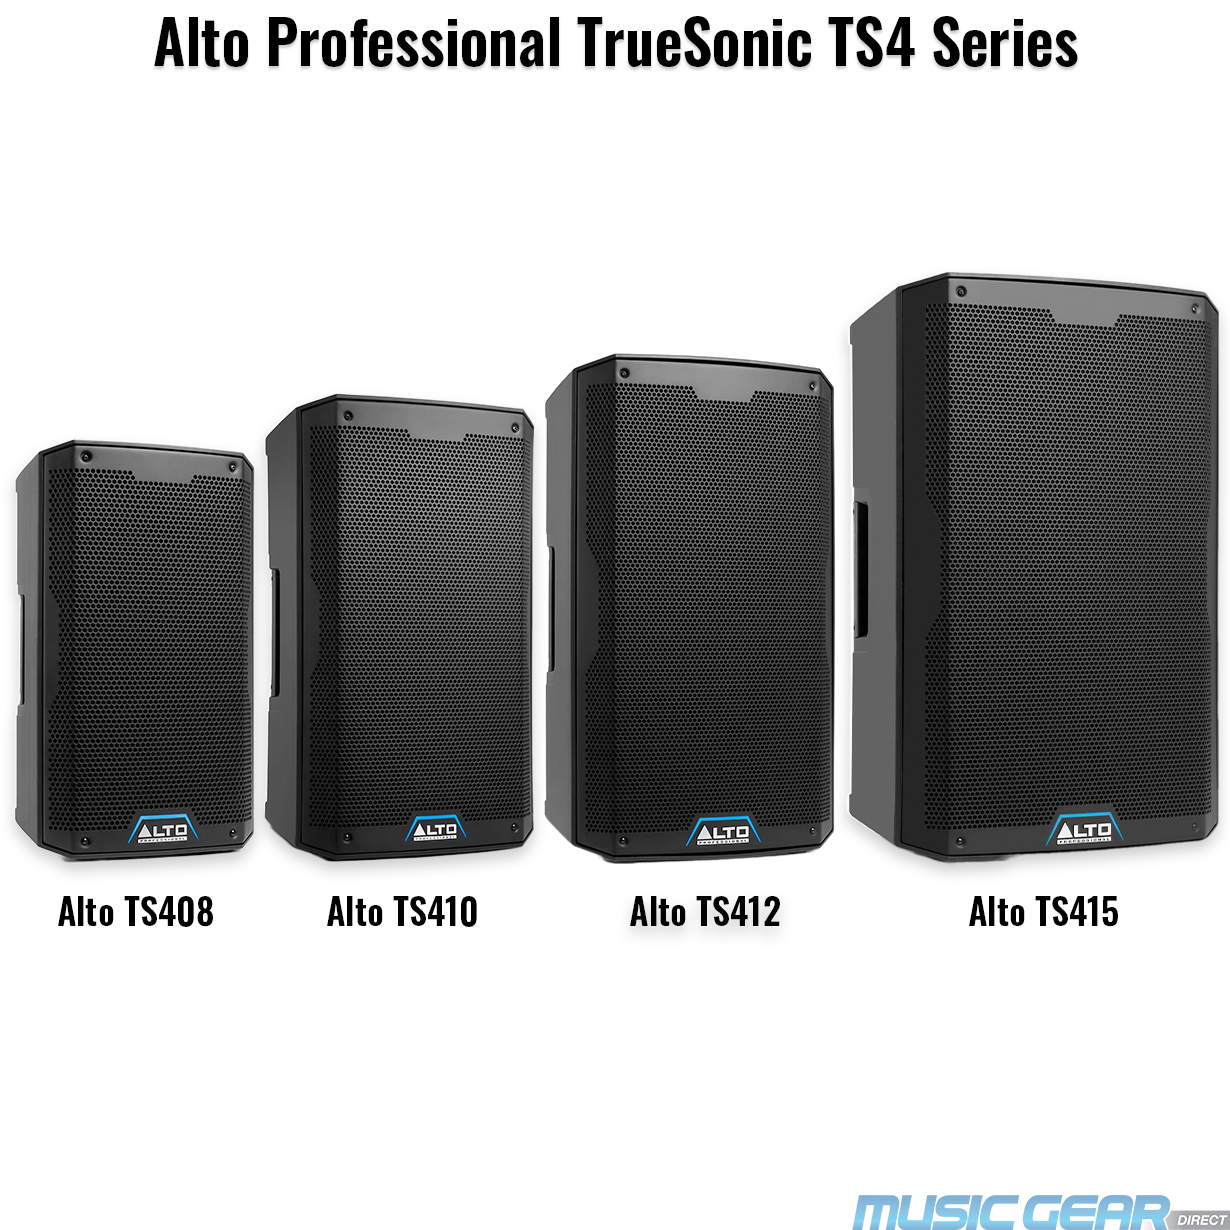 Alto Professional TS4 Series Lineup